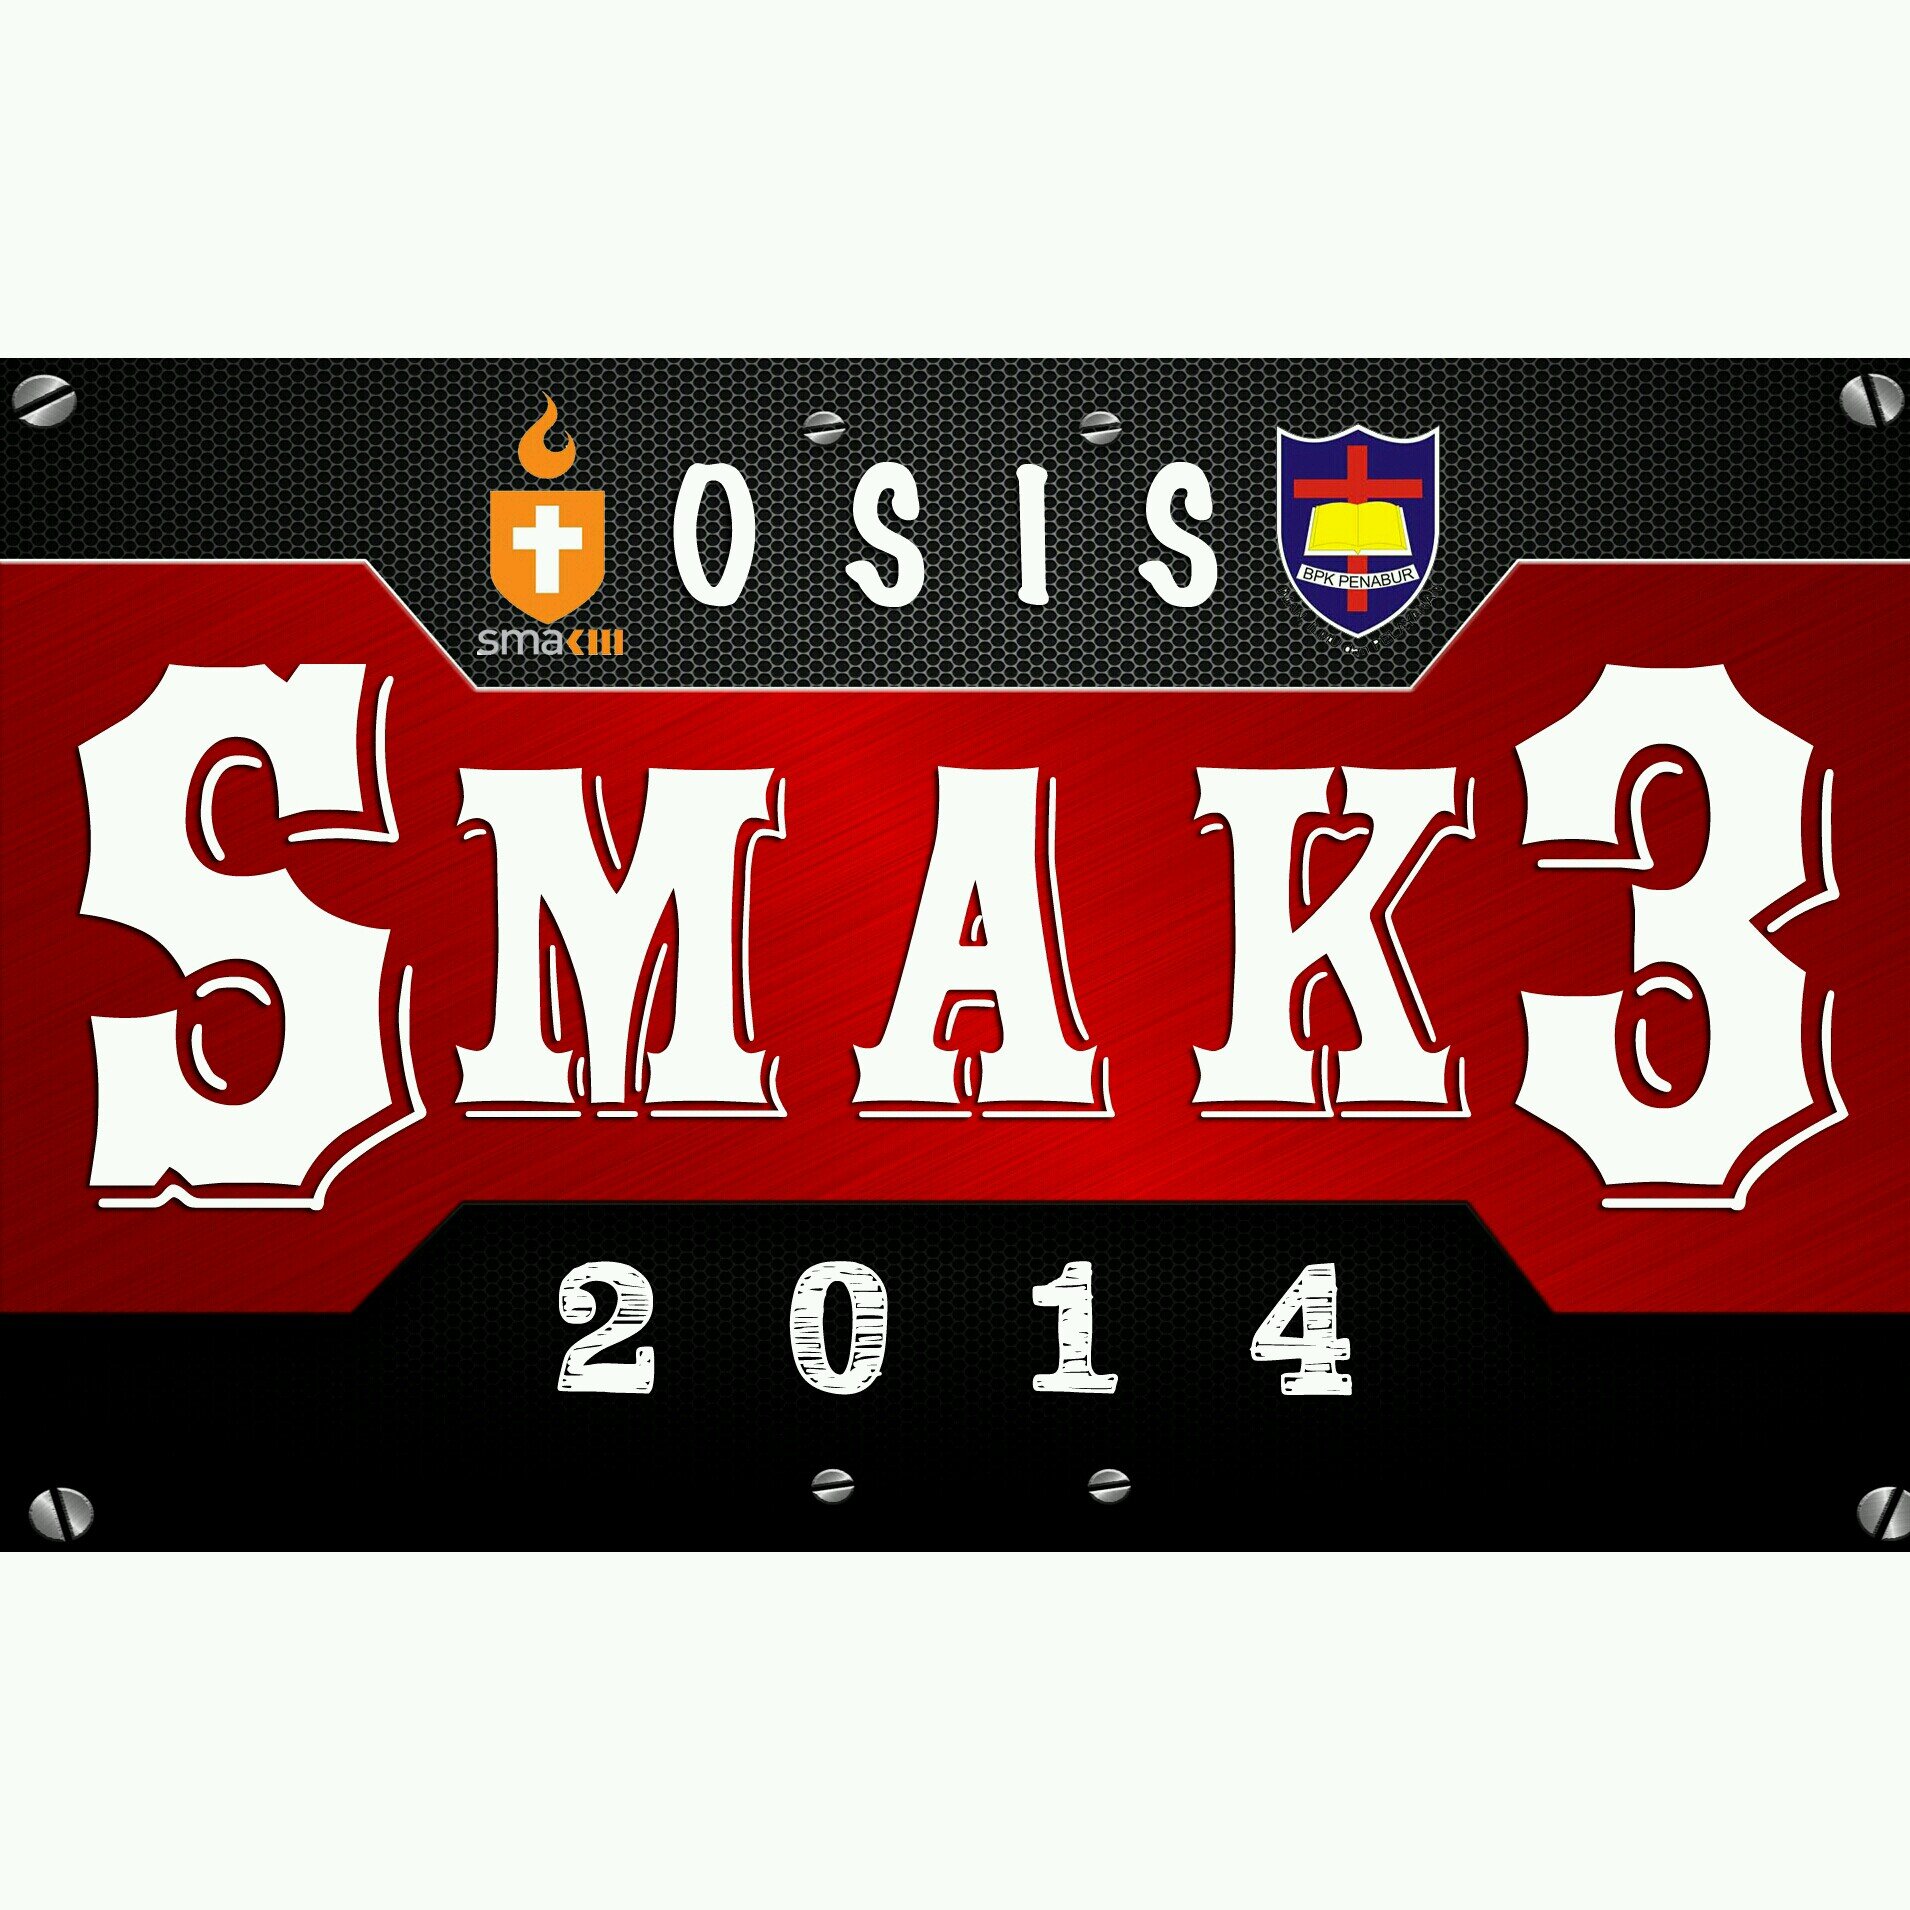 Official account of OSIS SMAK 3 BPK PENABUR Jakarta © Contact : osissmak3@gmail.com / (021) 4214883